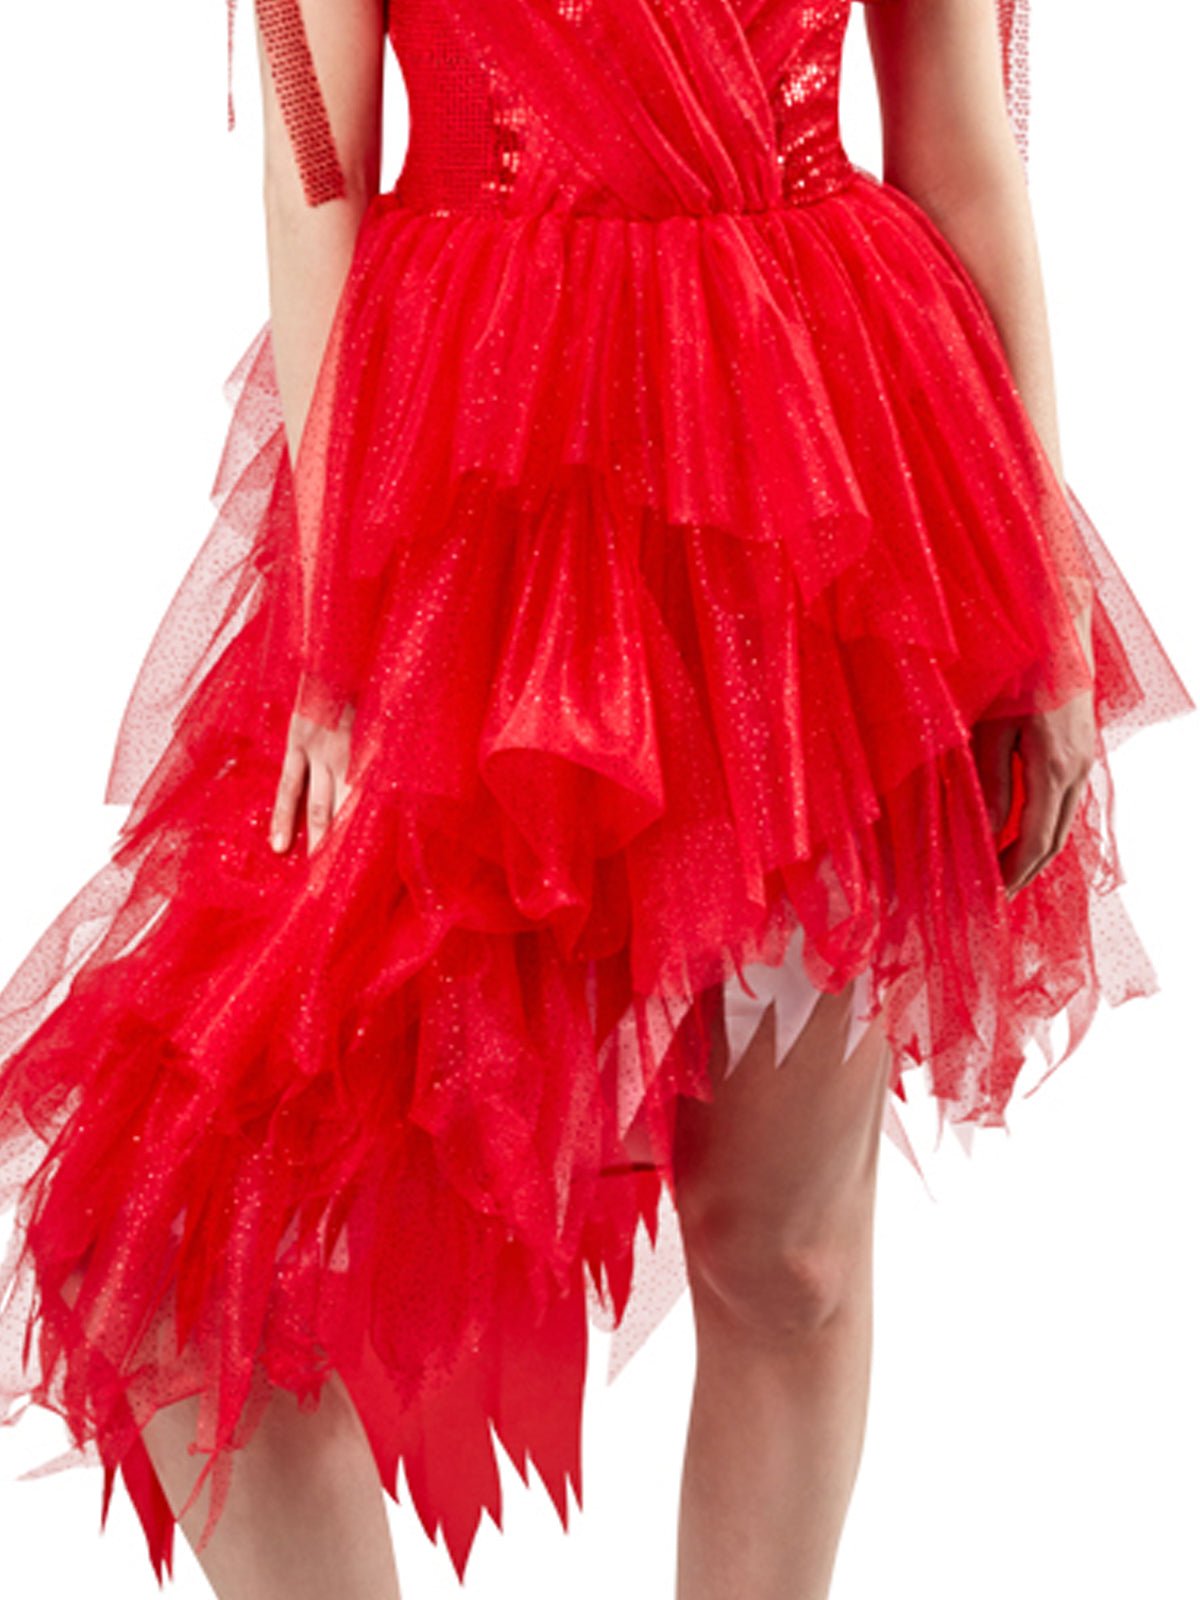 Red Dress Costume Fun: Transform into Harley Quinn!